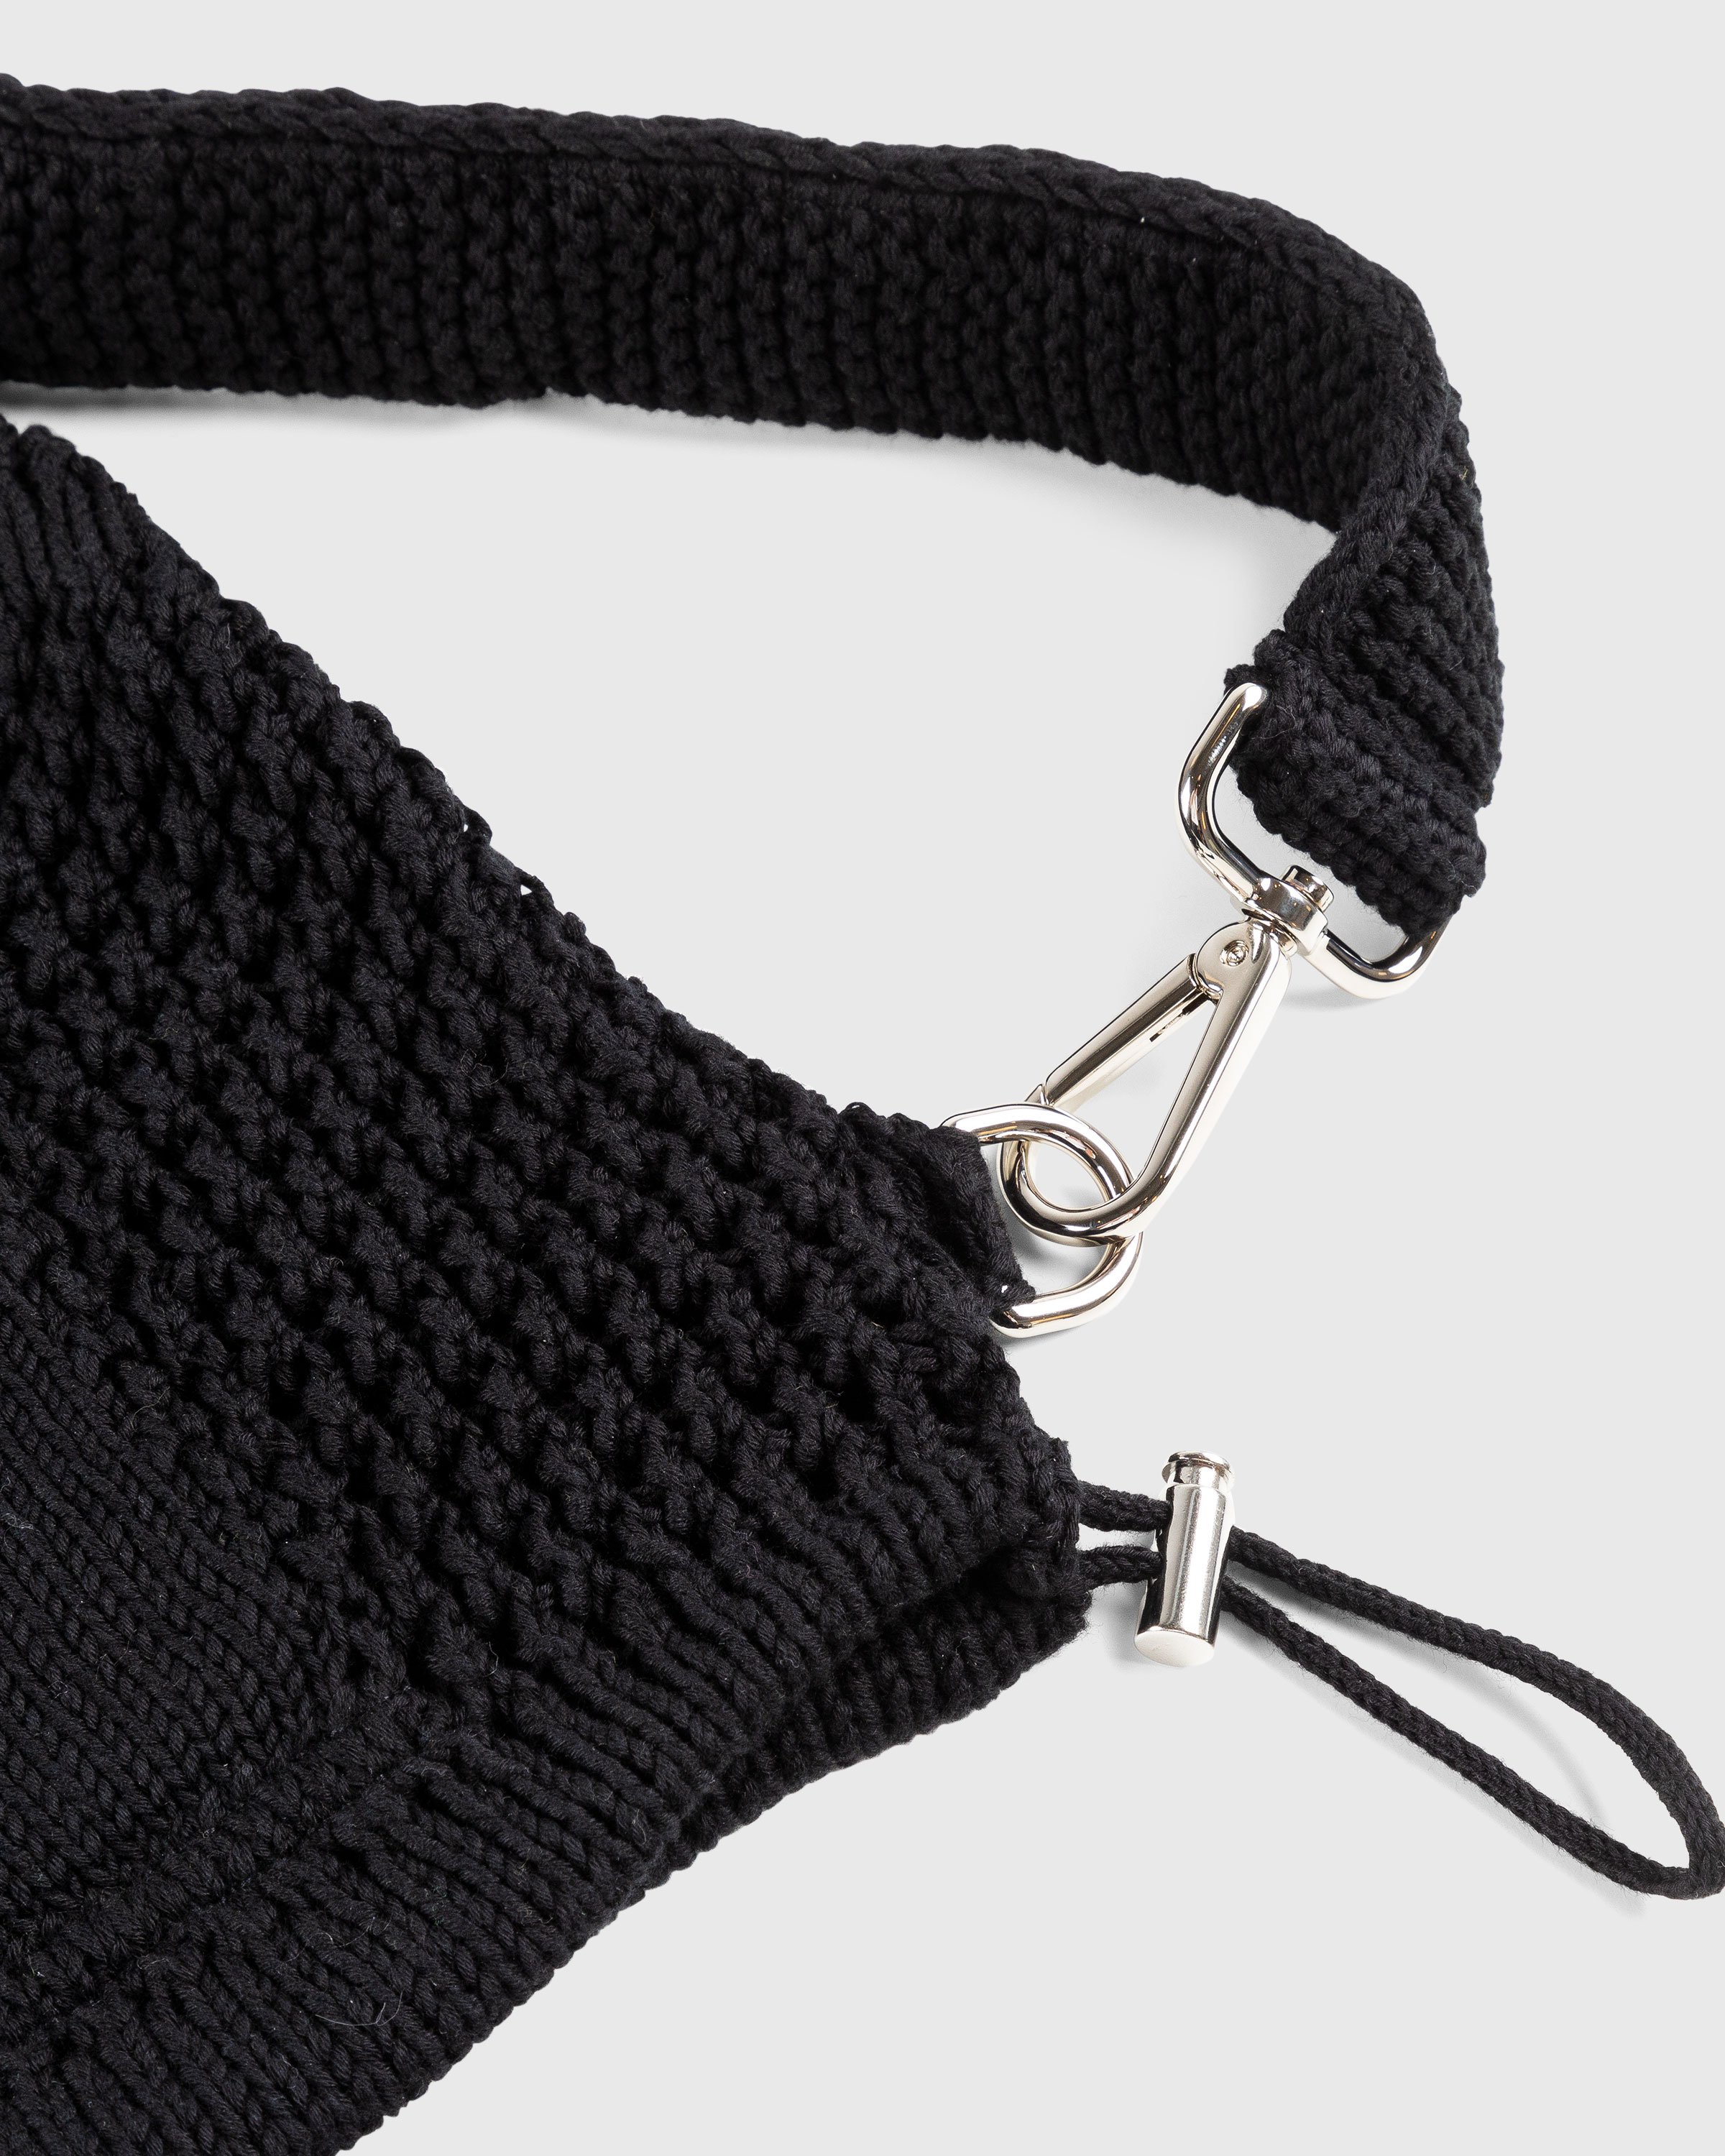 SSU - Mesh Stitch Knitted Bag Black - Accessories - Black - Image 3